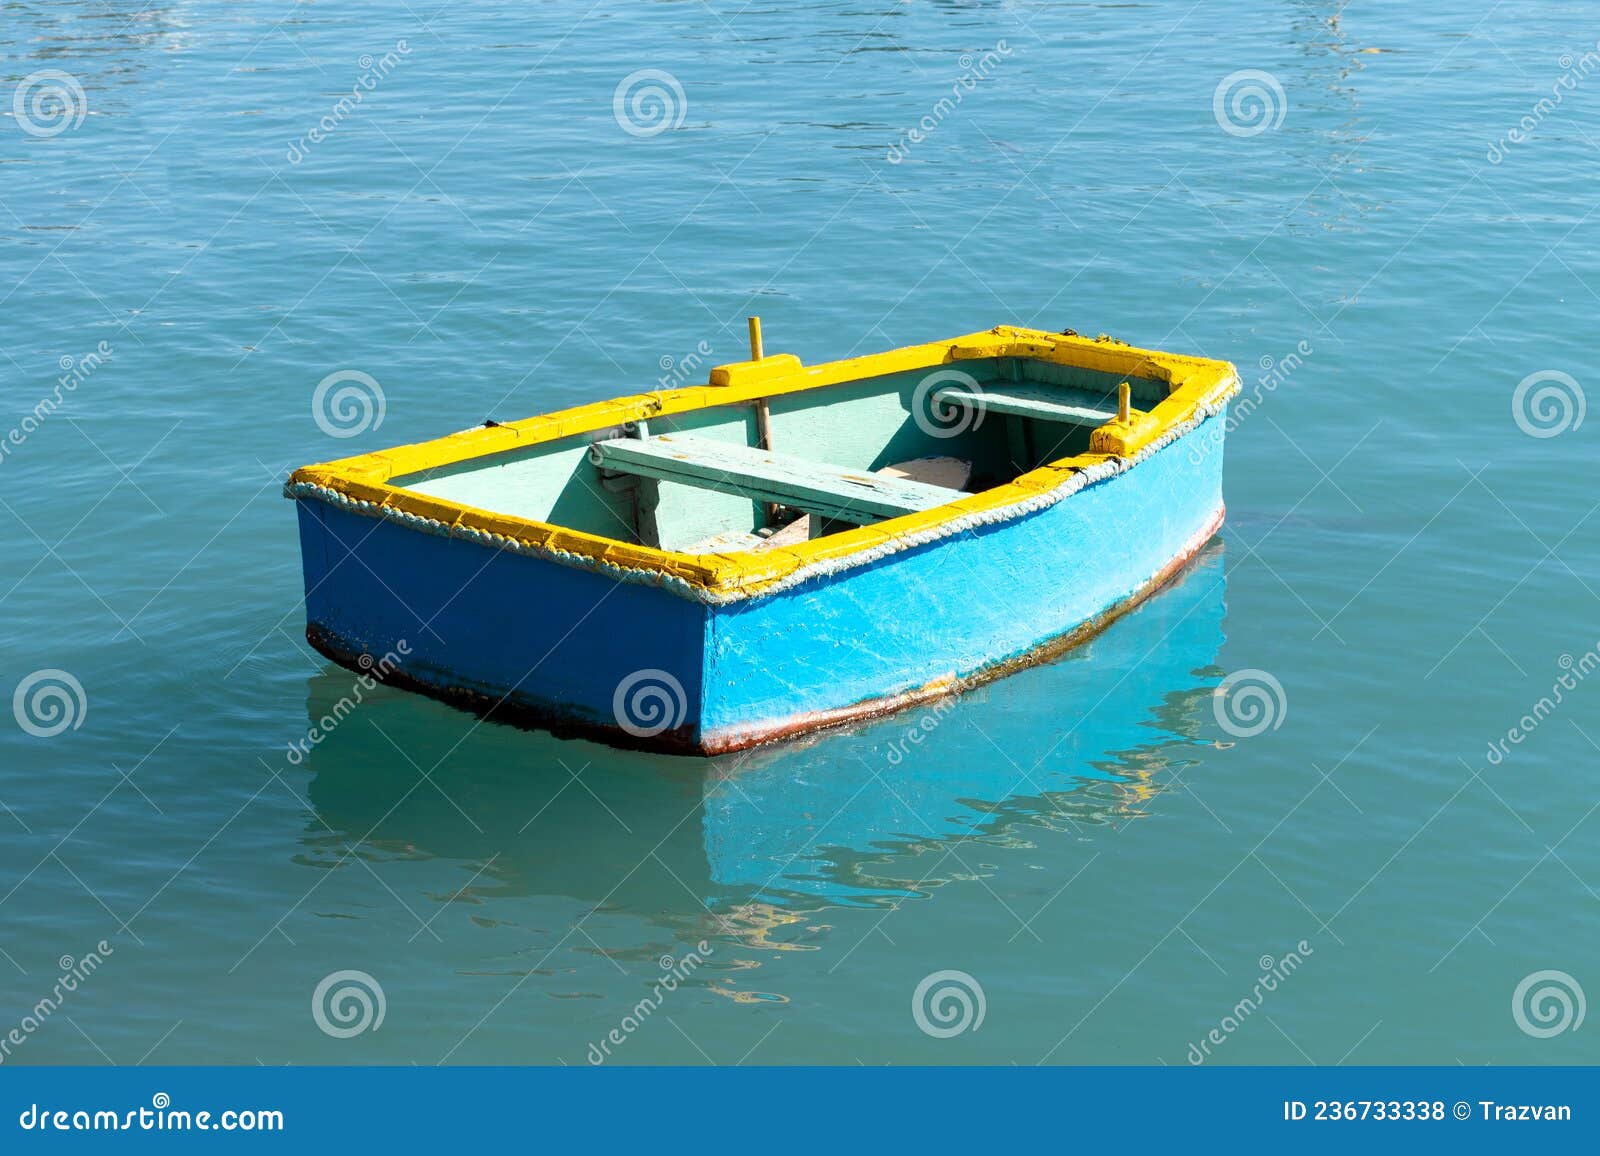 traditional maltese boat - the frejgatina